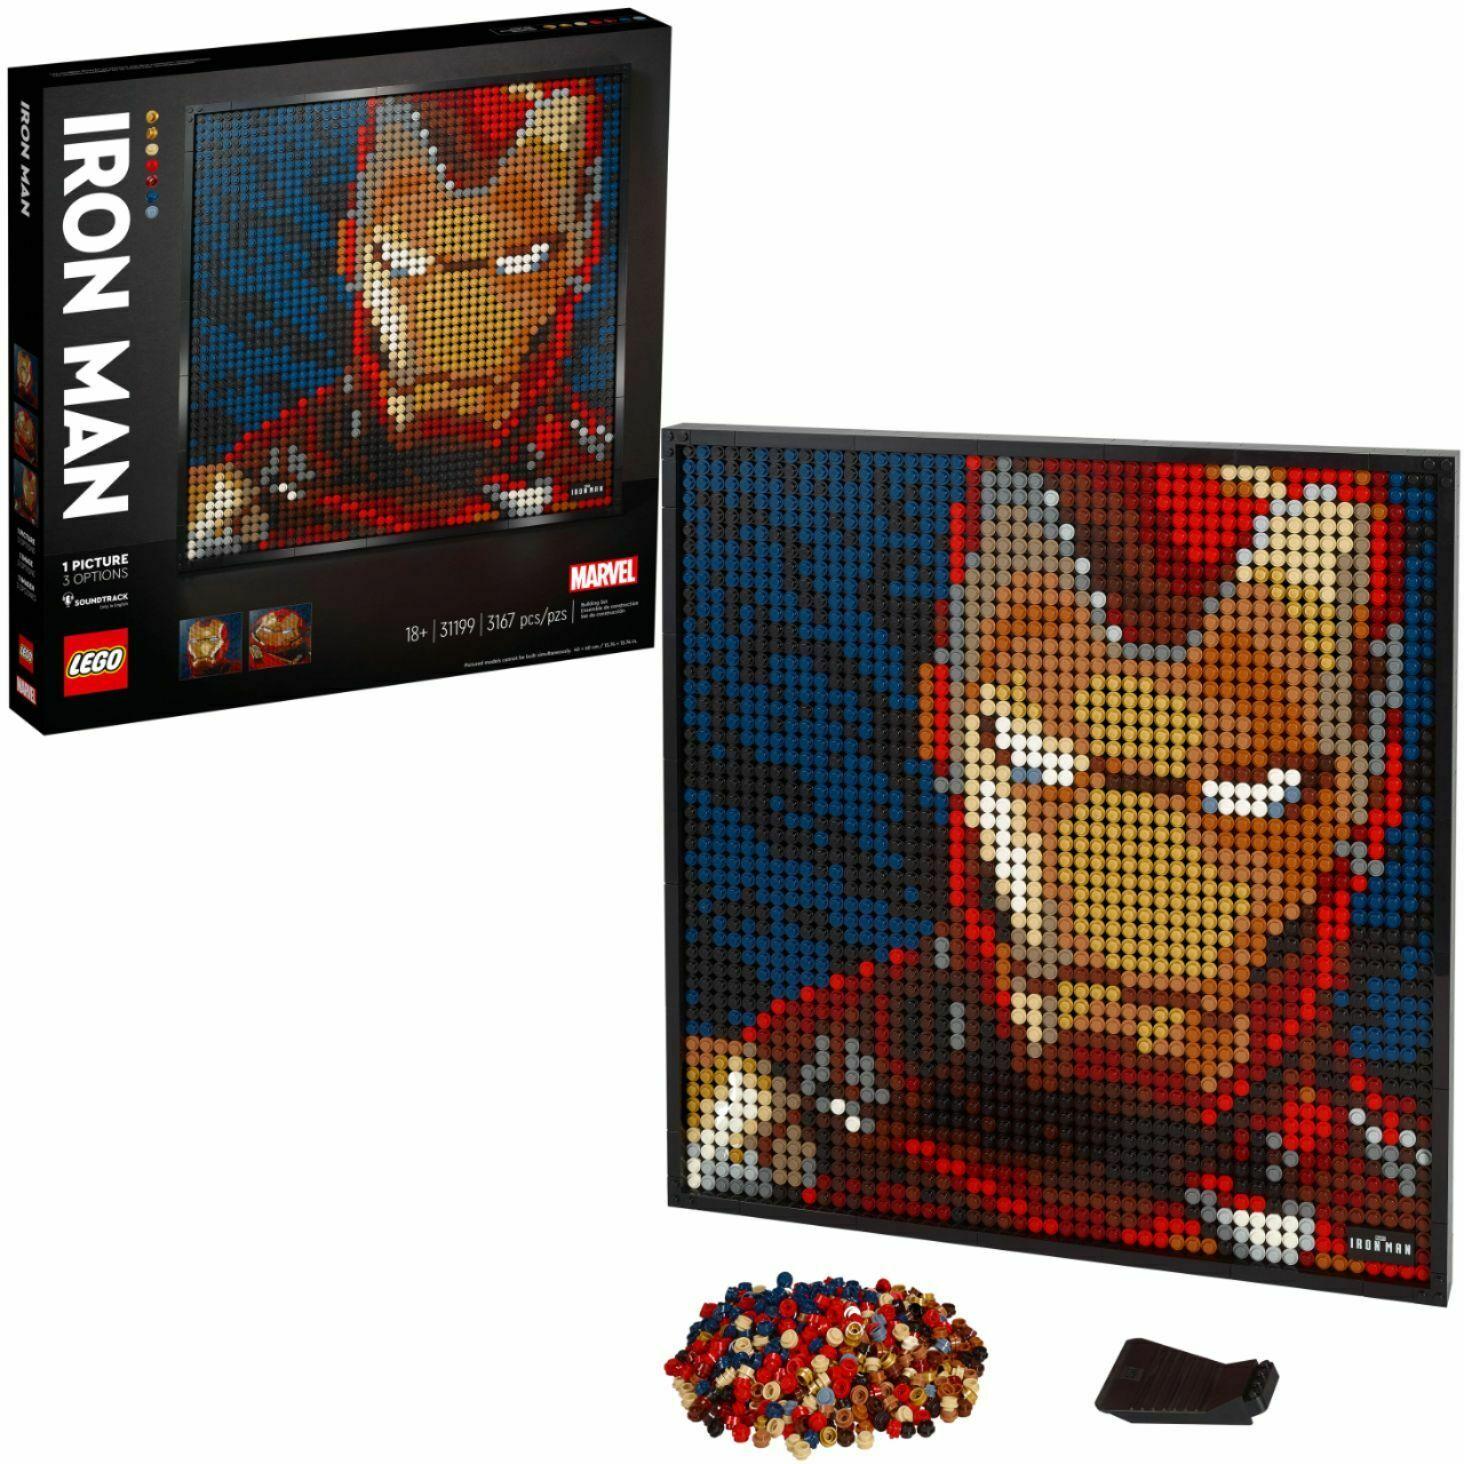 3167-Piece LEGO Art Marvel Studios Iron Man Building Set for $95.99 Shipped